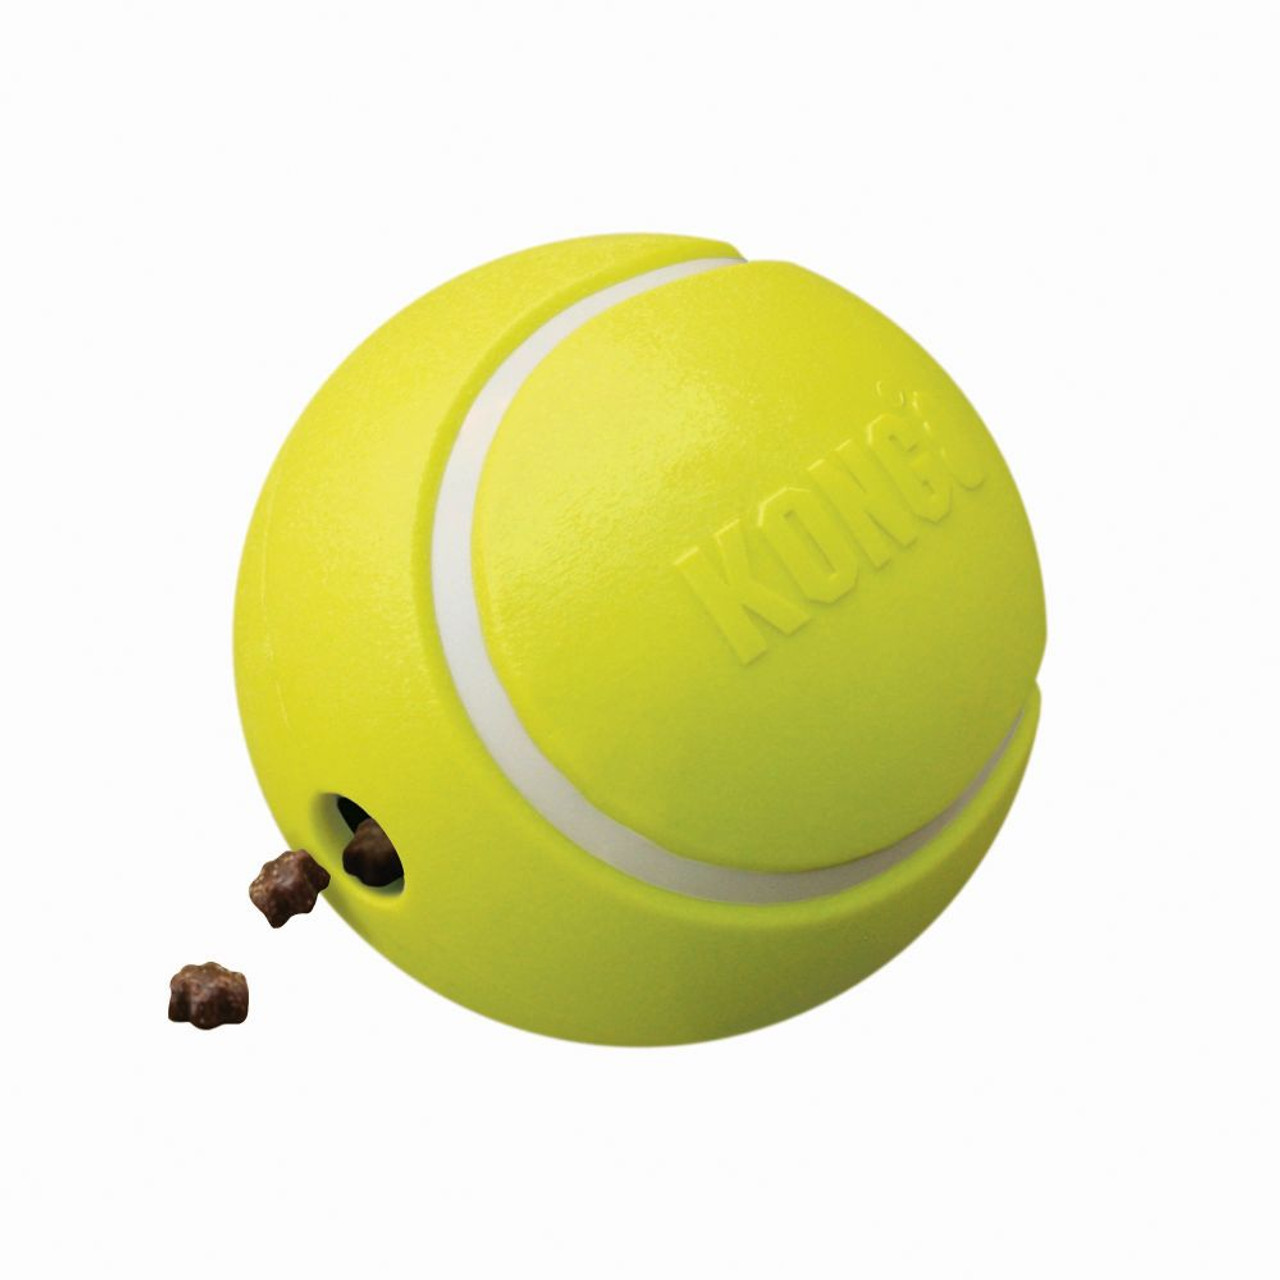 https://cdn11.bigcommerce.com/s-99vj2qx/images/stencil/1280x1280/products/22653/73217/rewards-tennis-ball-treat-kong__25605.1585507851.jpg?c=2